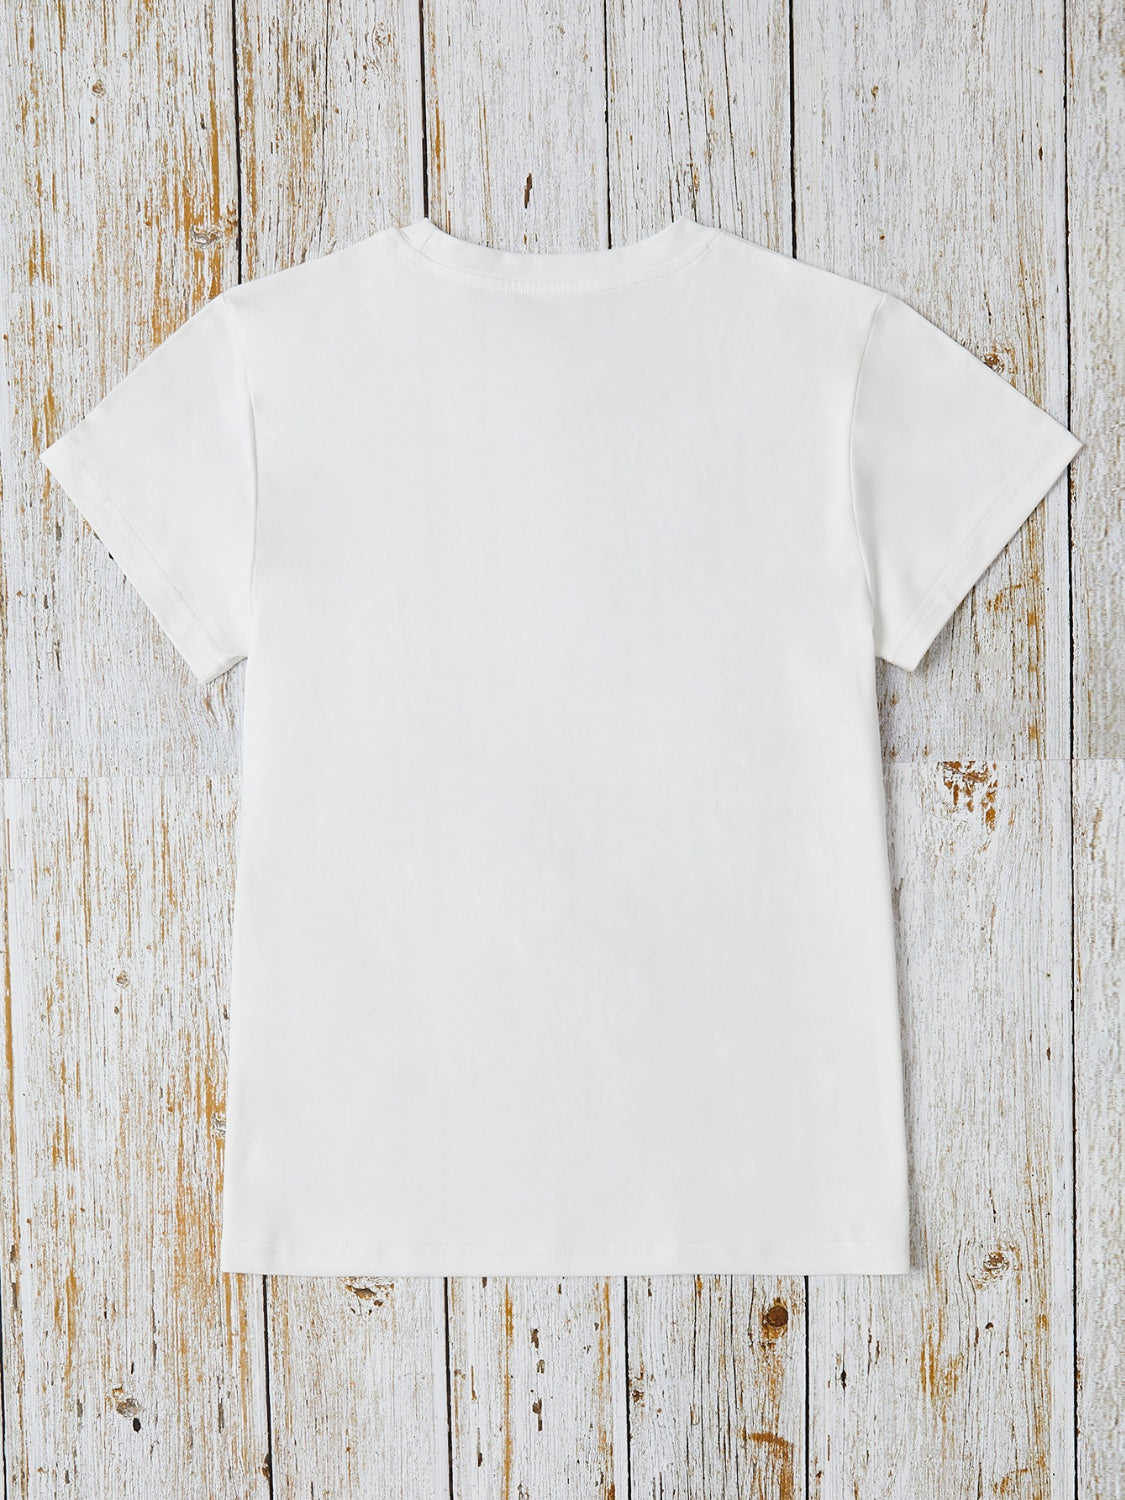 PREORDER- Sequin Heart Round Neck Short Sleeve T-Shirt